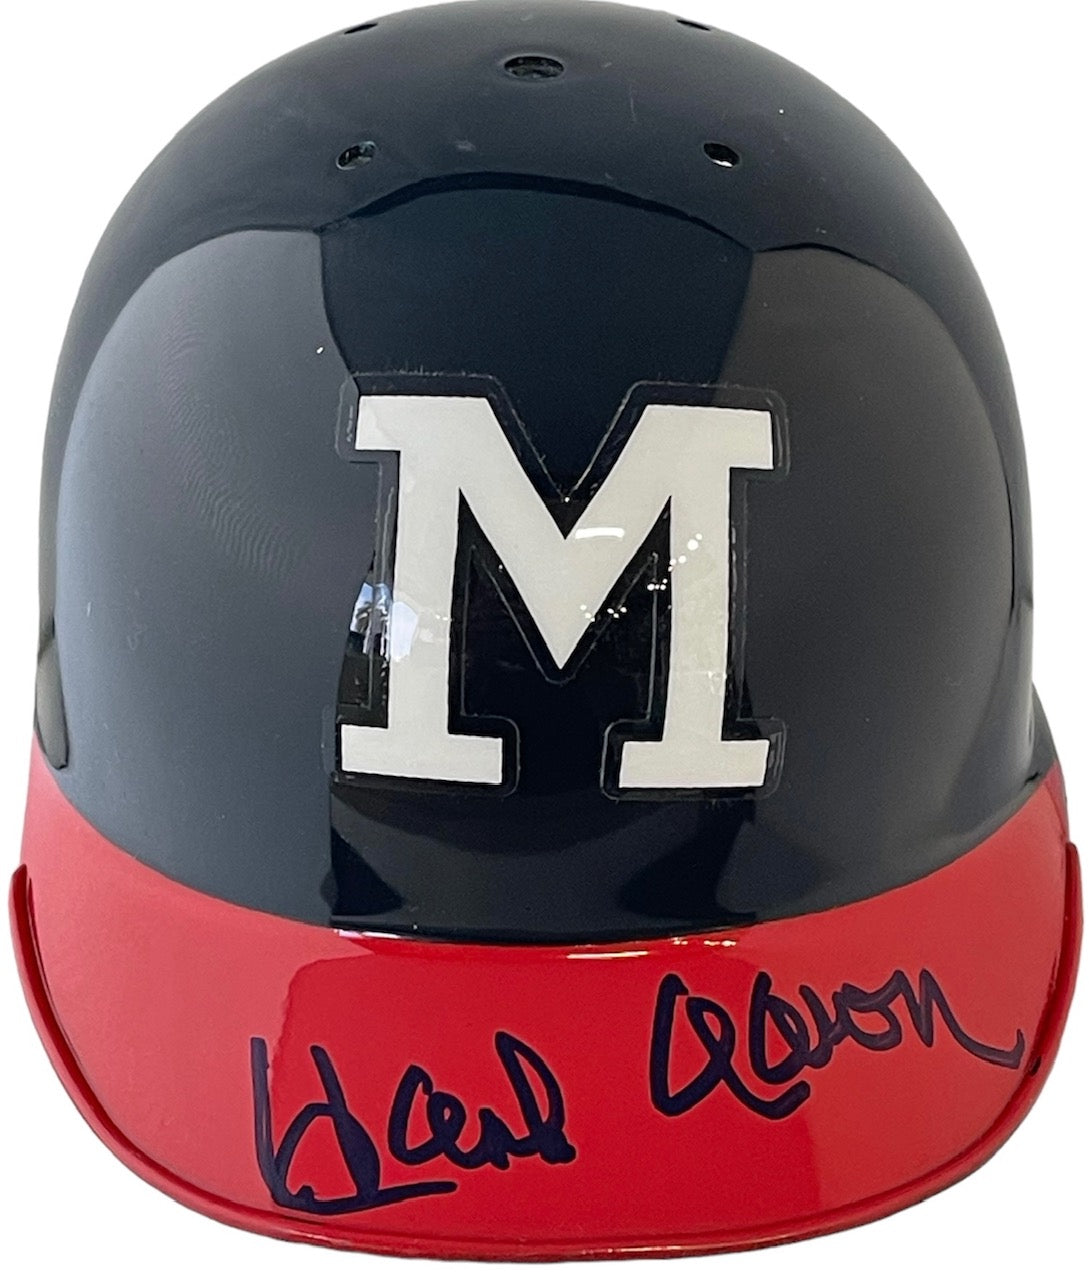 Hank Aaron Autographed Official Major League Baseball (Steiner